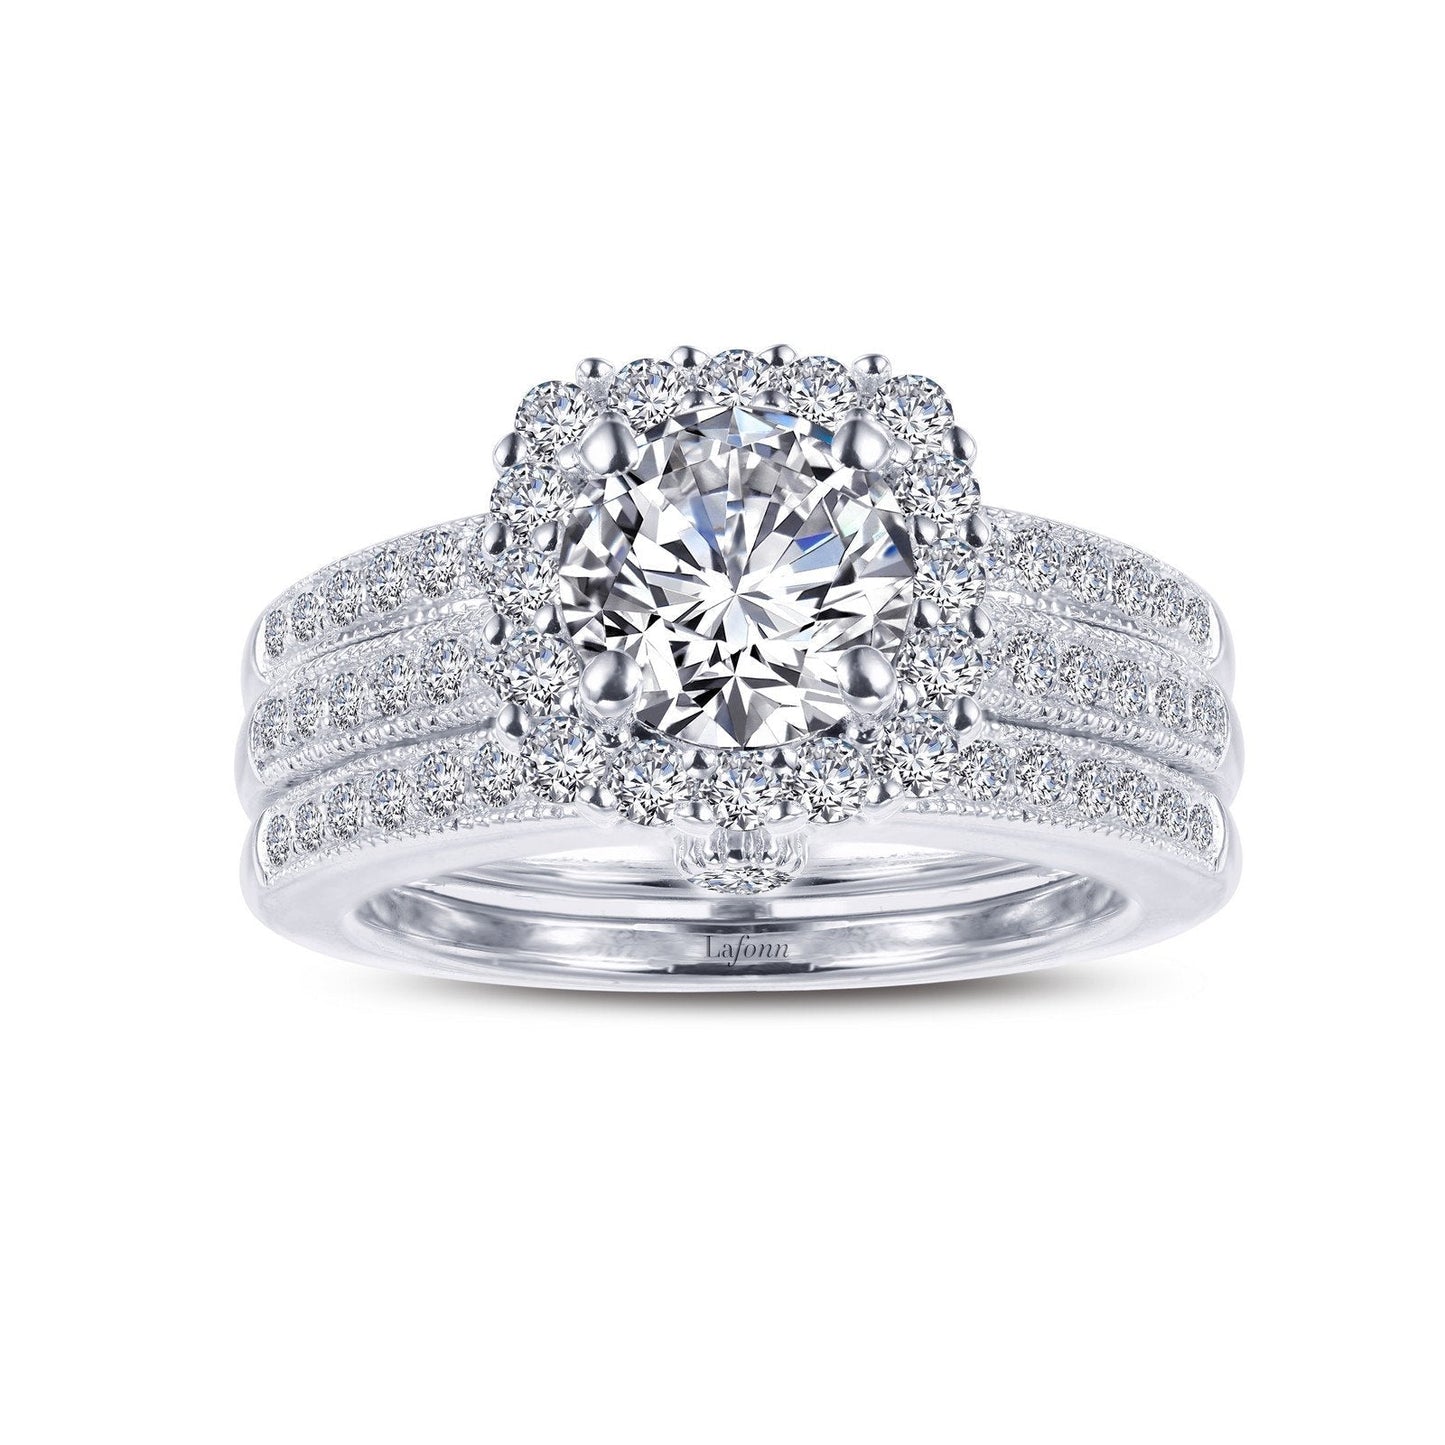 Lafonn Infinite Love Wedding Set Simulated Diamond RINGS Size 9 Platinum 2.5 CTS Approx.10mm(H)X9.8mm(W)